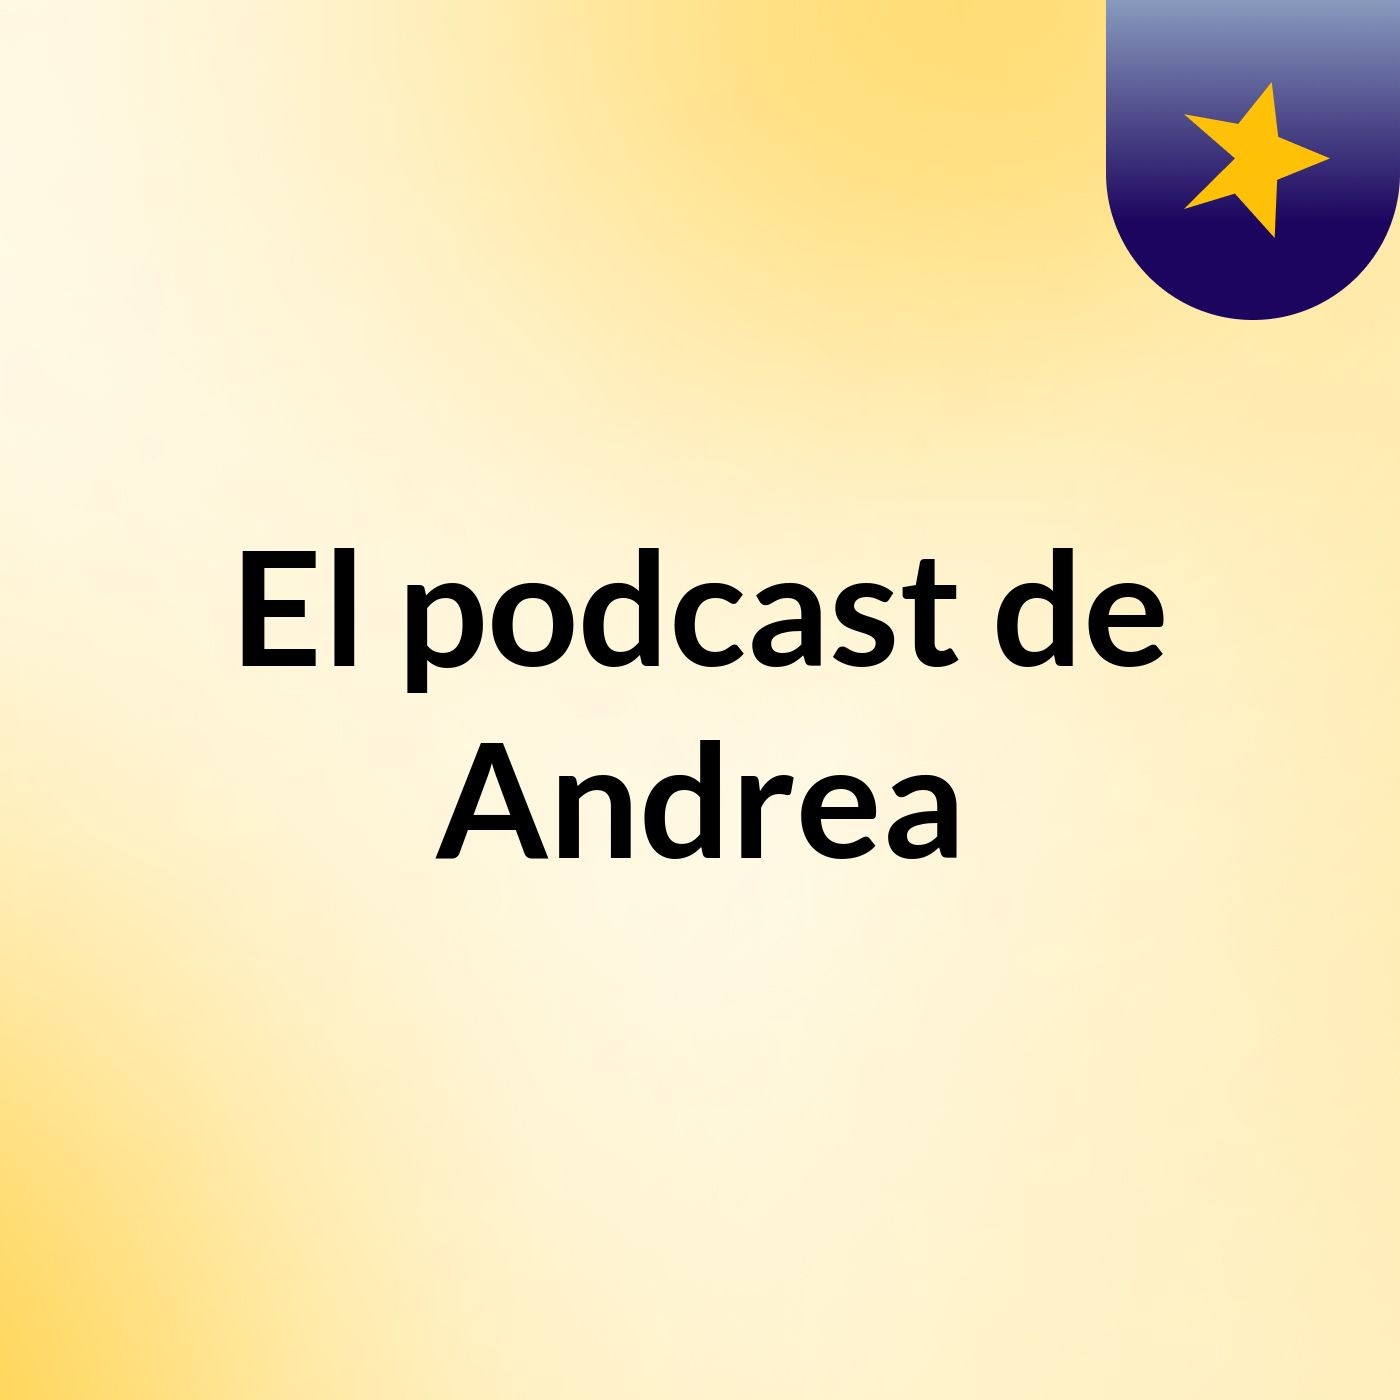 Episodio 3 - El podcast de Andrea